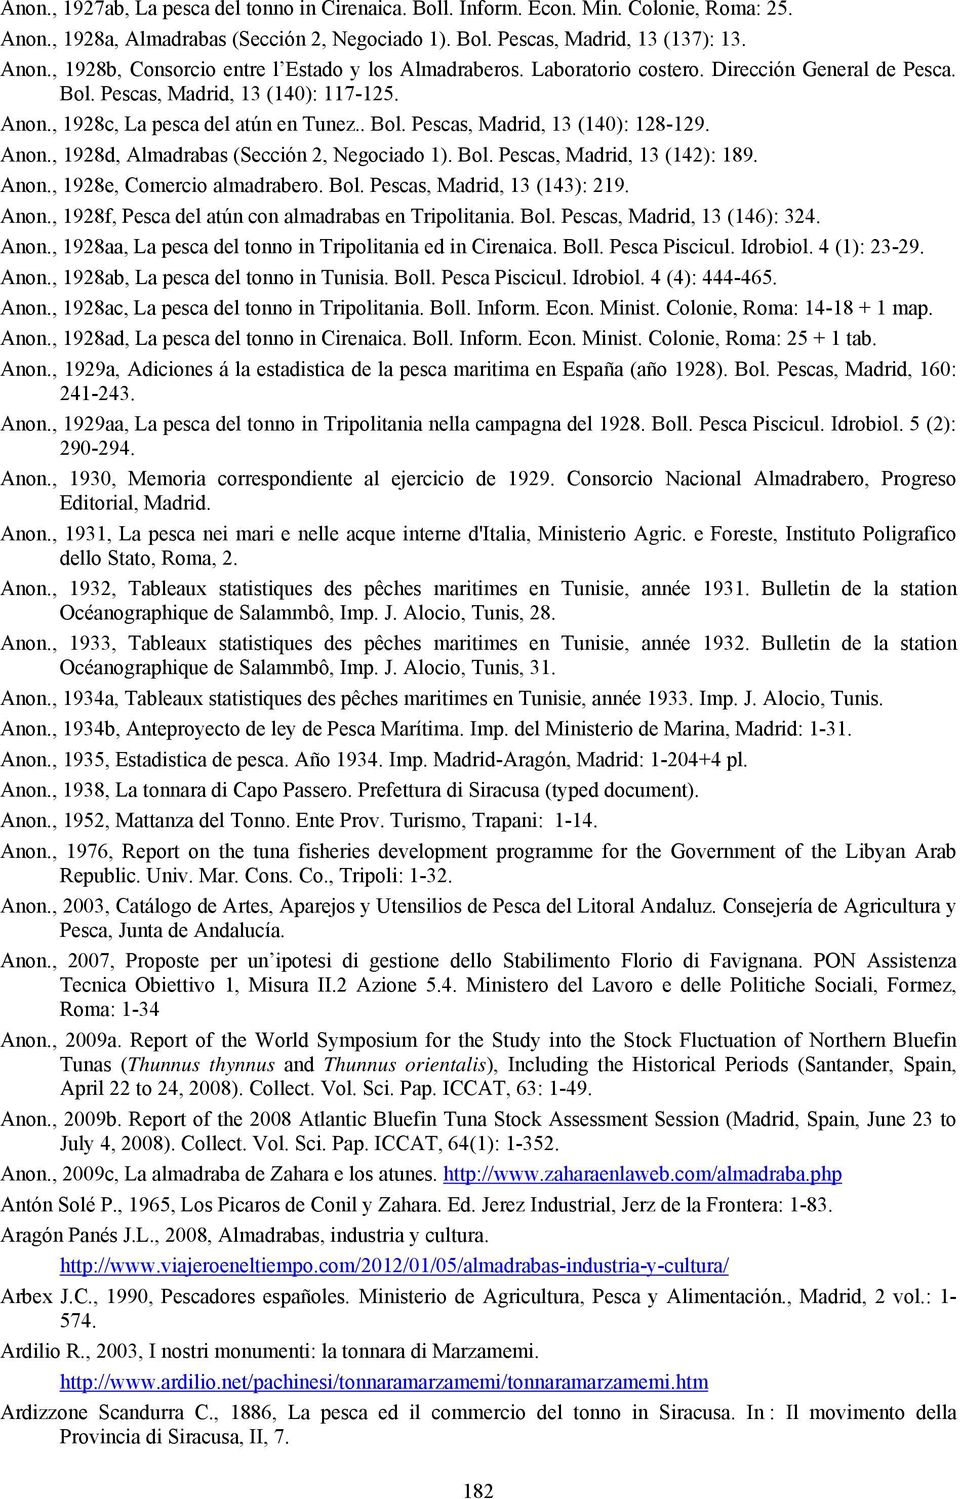 Bol. Pescas, Madrid, 13 (142): 189. Anon., 1928e, Comercio almadrabero. Bol. Pescas, Madrid, 13 (143): 219. Anon., 1928f, Pesca del atún con almadrabas en Tripolitania. Bol. Pescas, Madrid, 13 (146): 324.